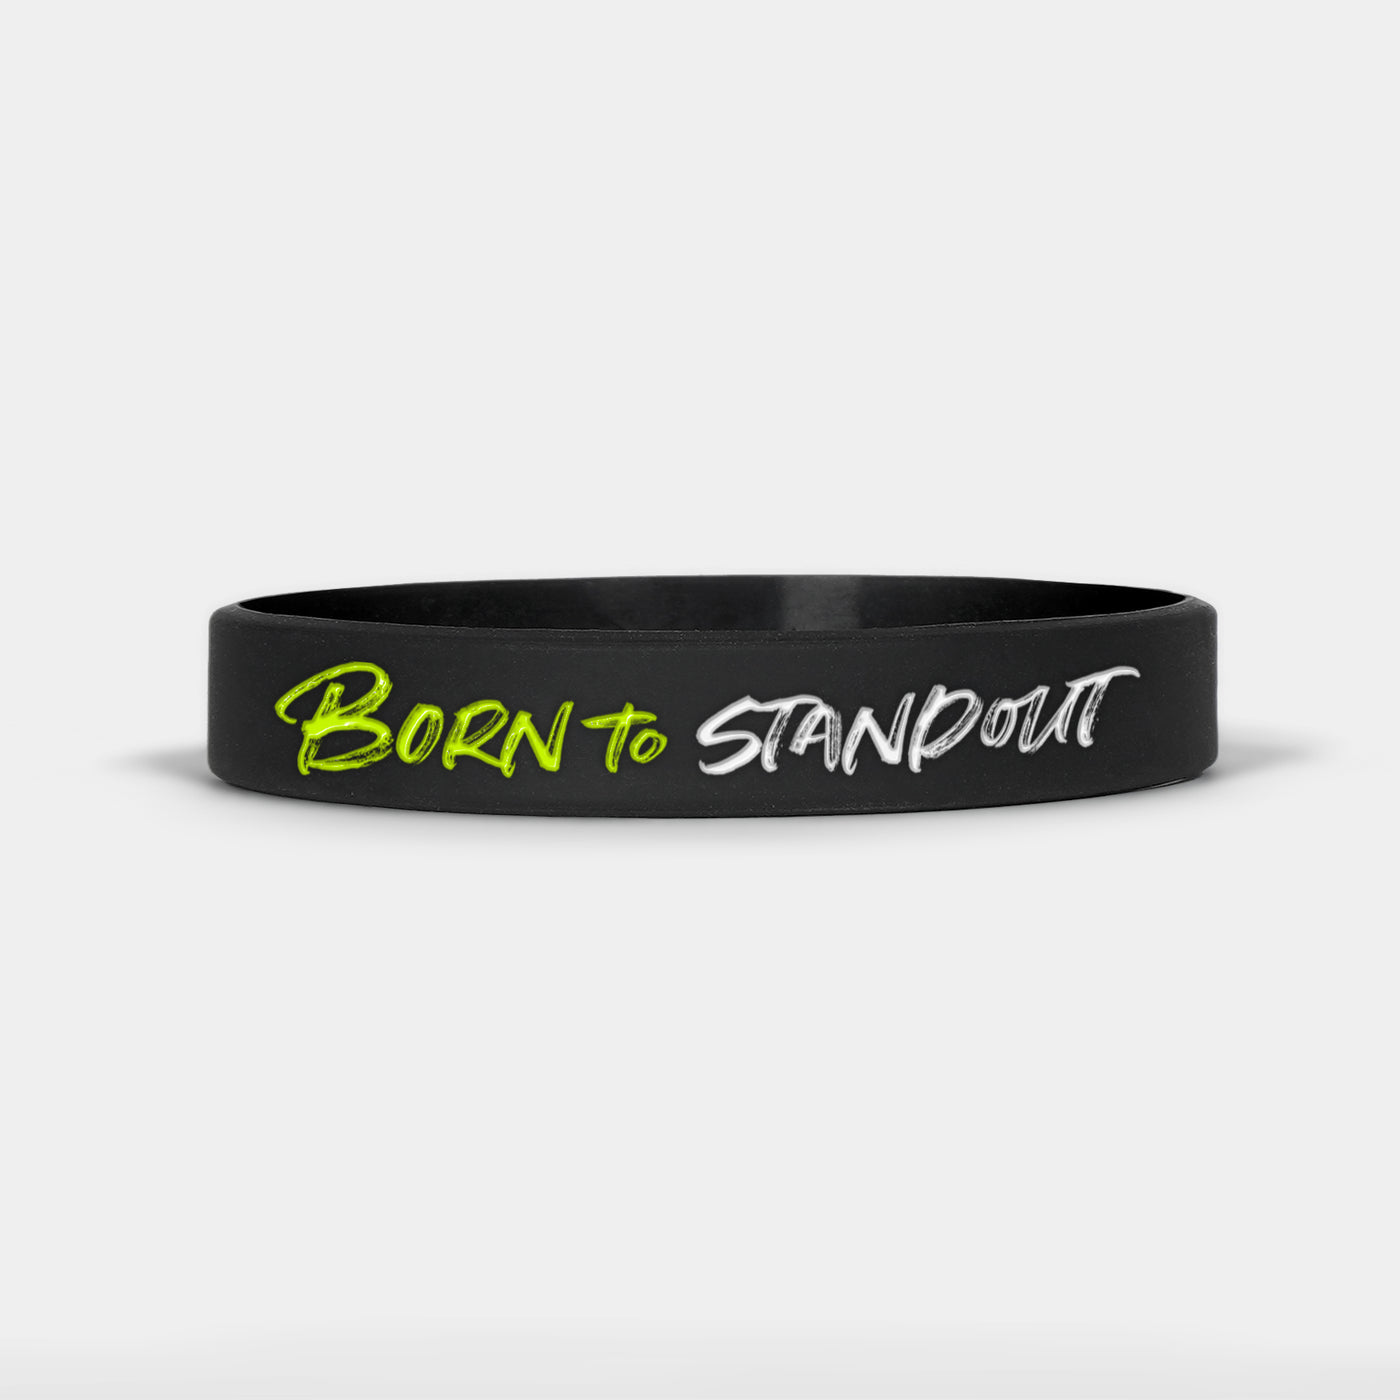 Born to Standout Motivational Wristband